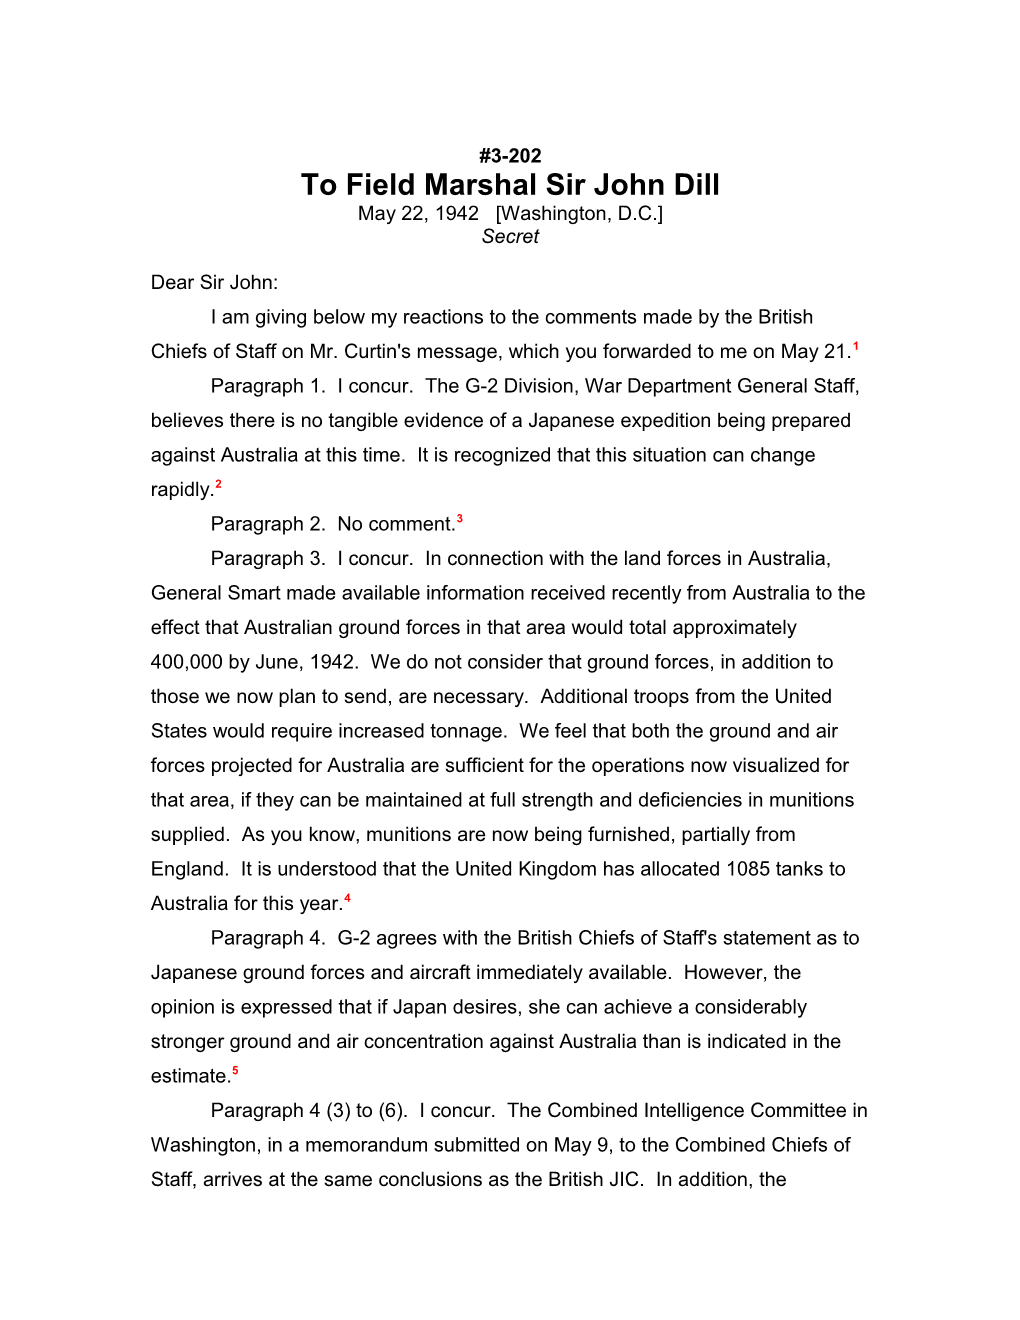 To Field Marshal Sir John Dill